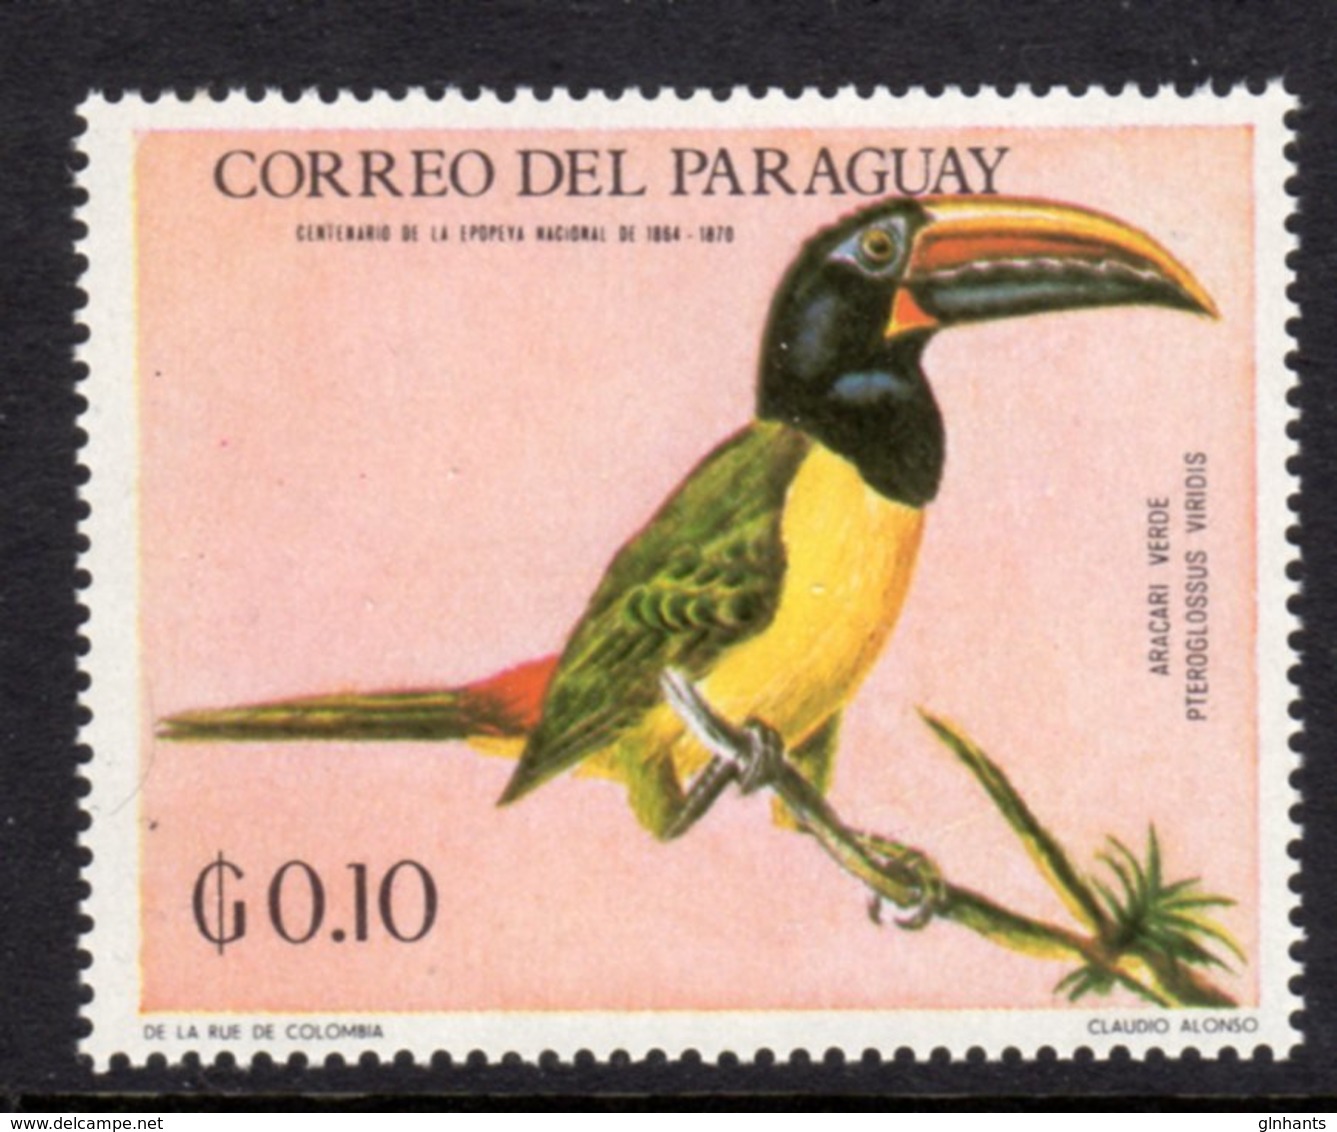 PARAGUAY - 1969 10c WILDLIFE BIRD STAMP FINE MNH ** Mi 1929 - Paraguay